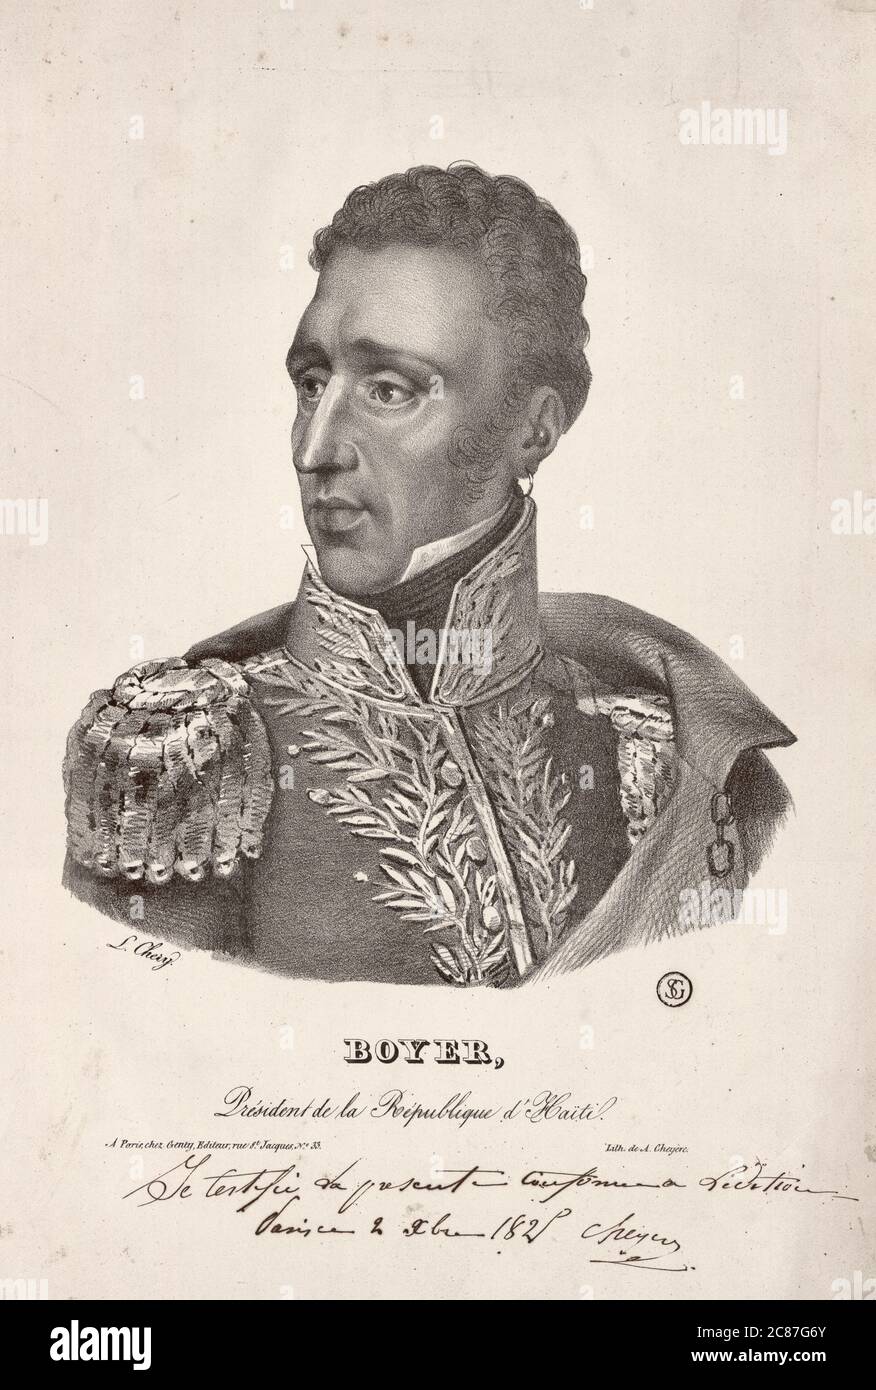 Jean-Pierre Boyer, President of the Republic of Haiti, circa 1825 Stock Photo